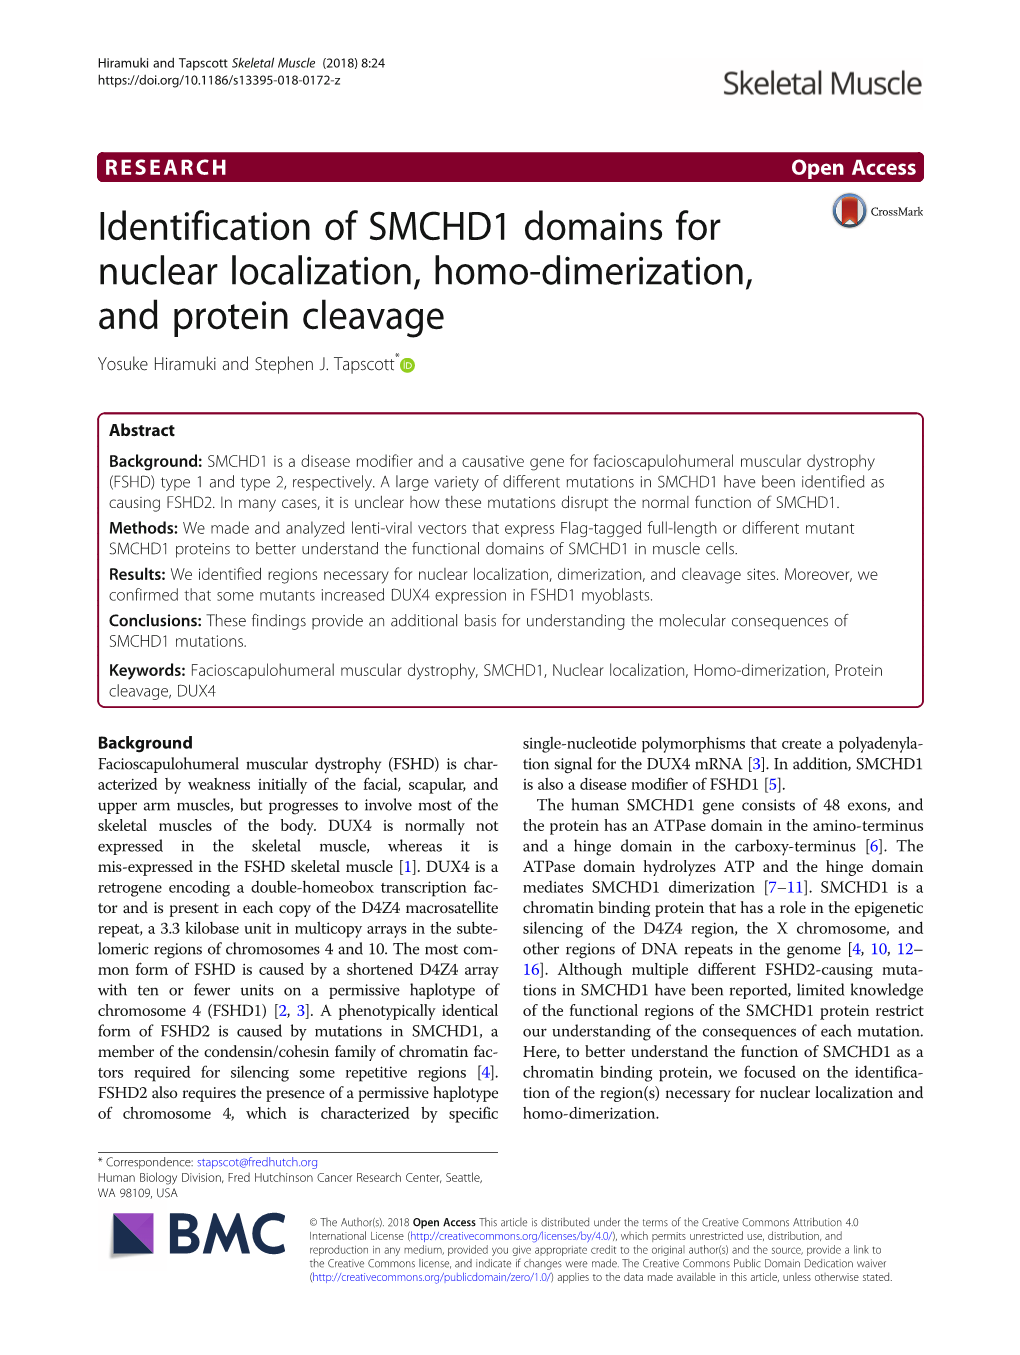 Identification of SMCHD1 Domains for Nuclear Localization, Homo-Dimerization, and Protein Cleavage Yosuke Hiramuki and Stephen J